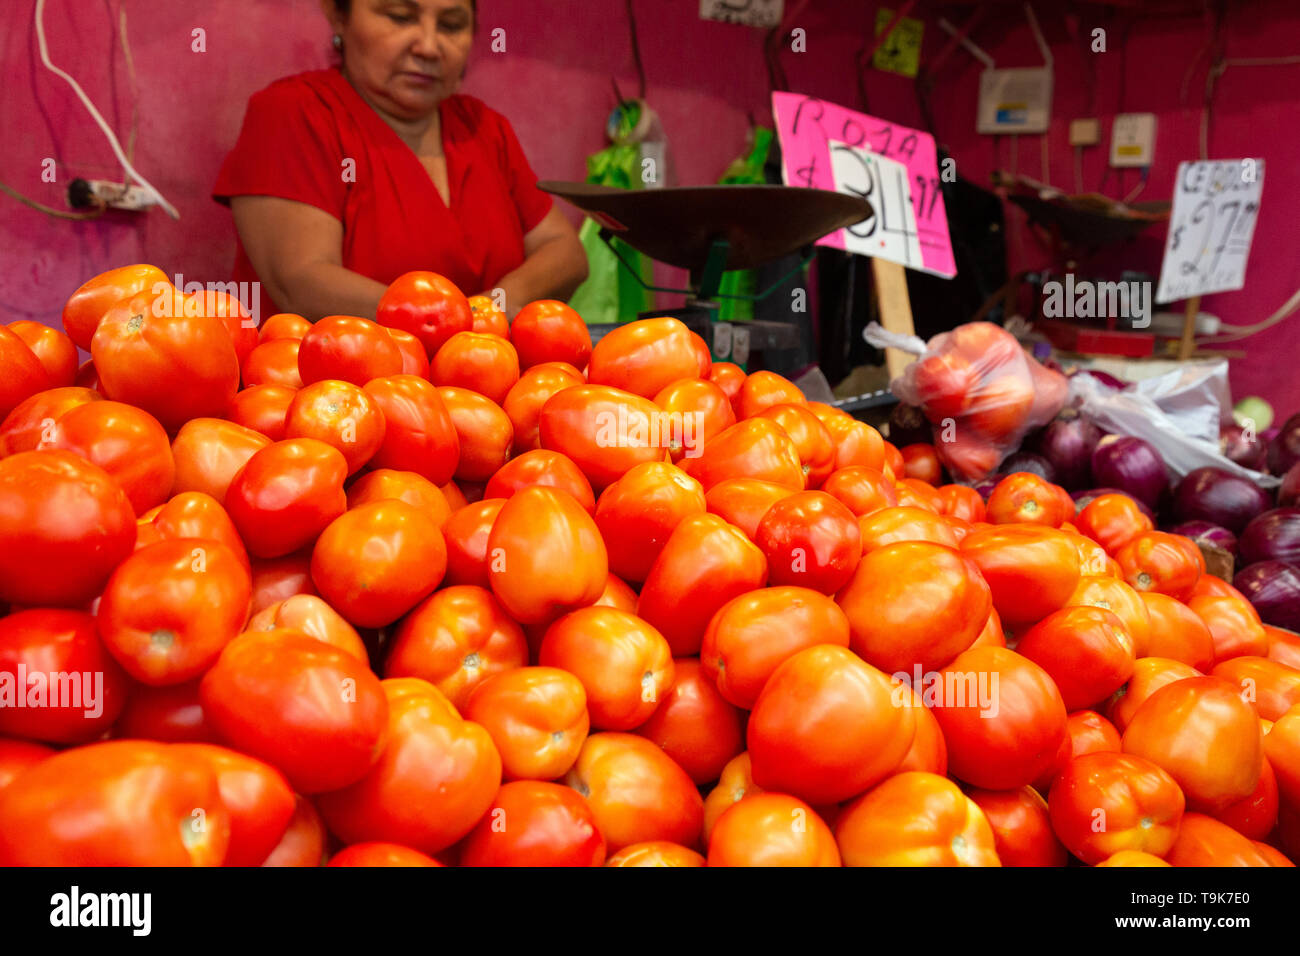 latin american food market - tomatoes for sale at a food stall, Merida Yucatan Mexico Latin America Stock Photo